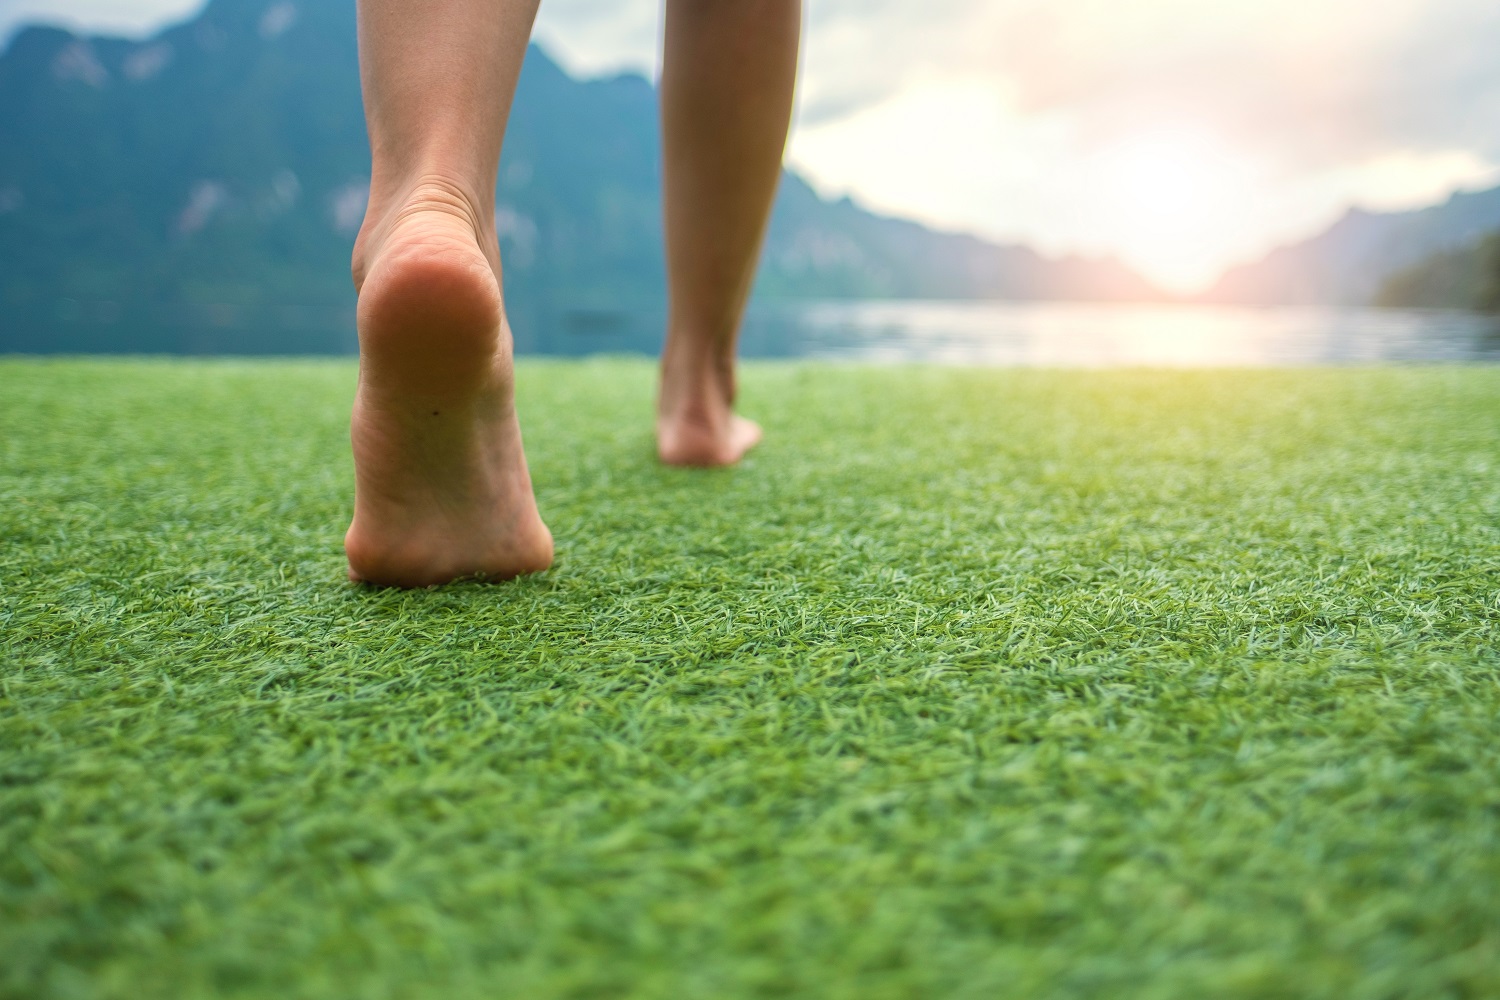 grounding walking feet on grass